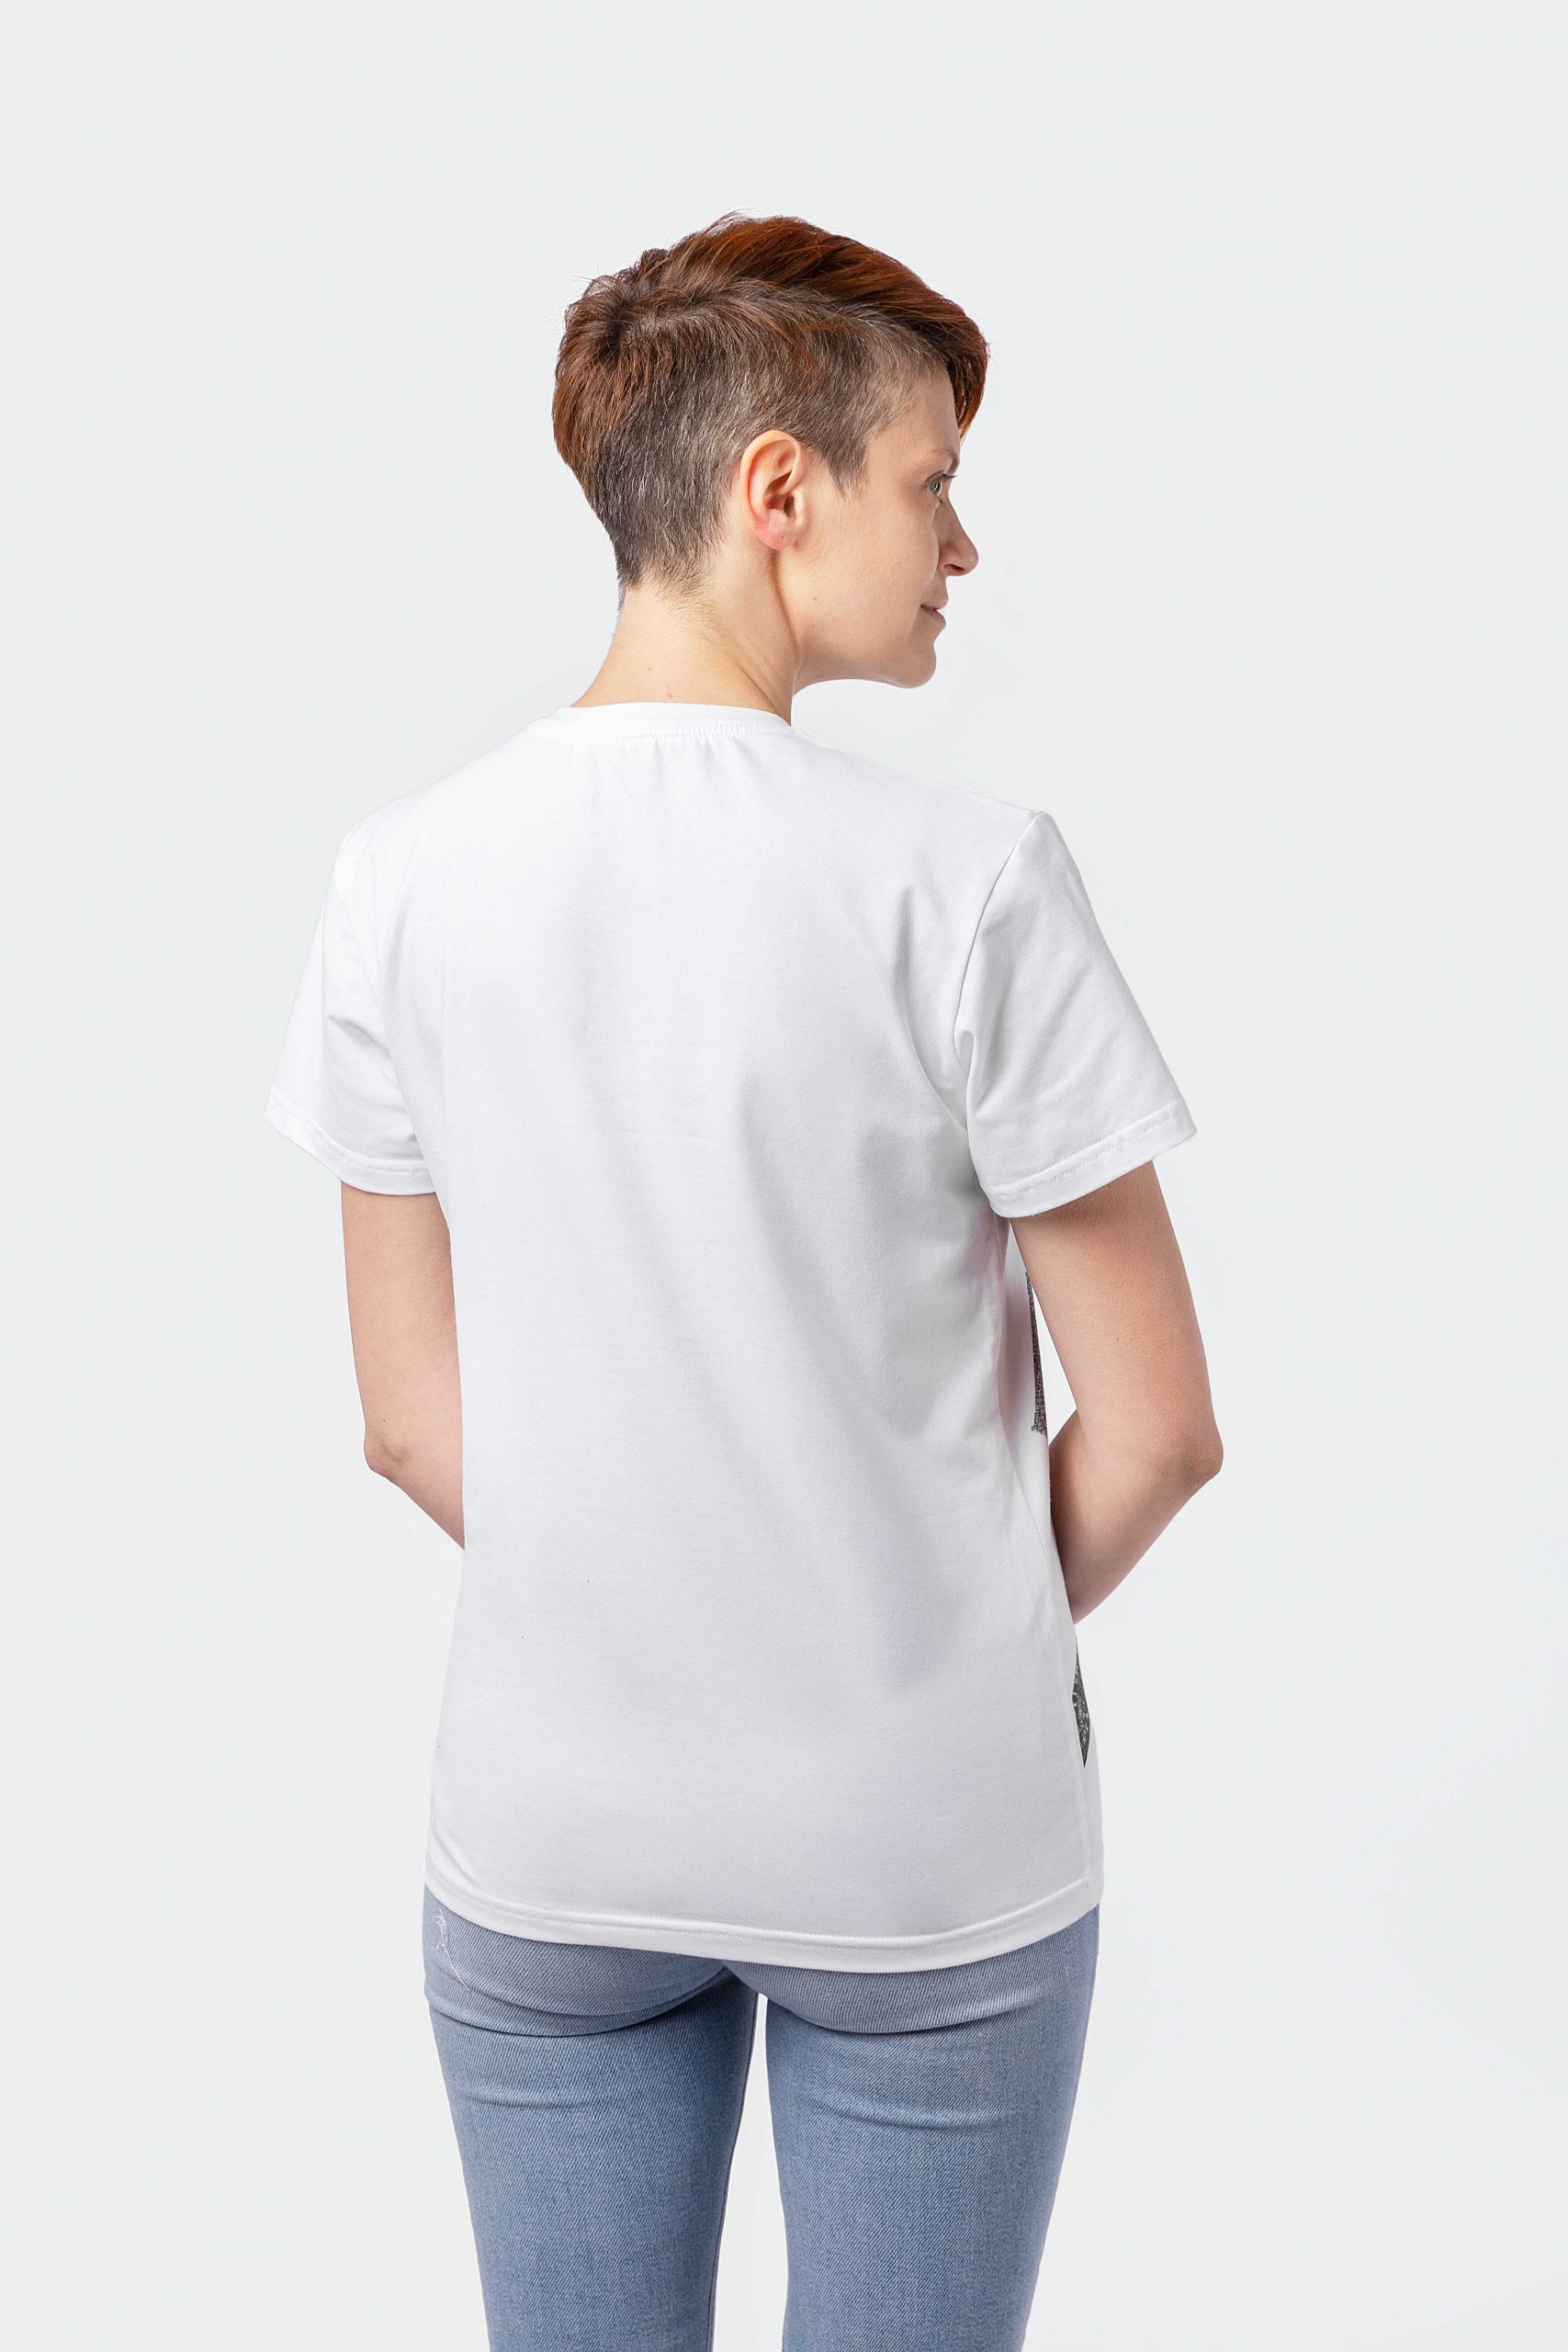 Women's T-Shirt Bayraktar. Color white. 1.